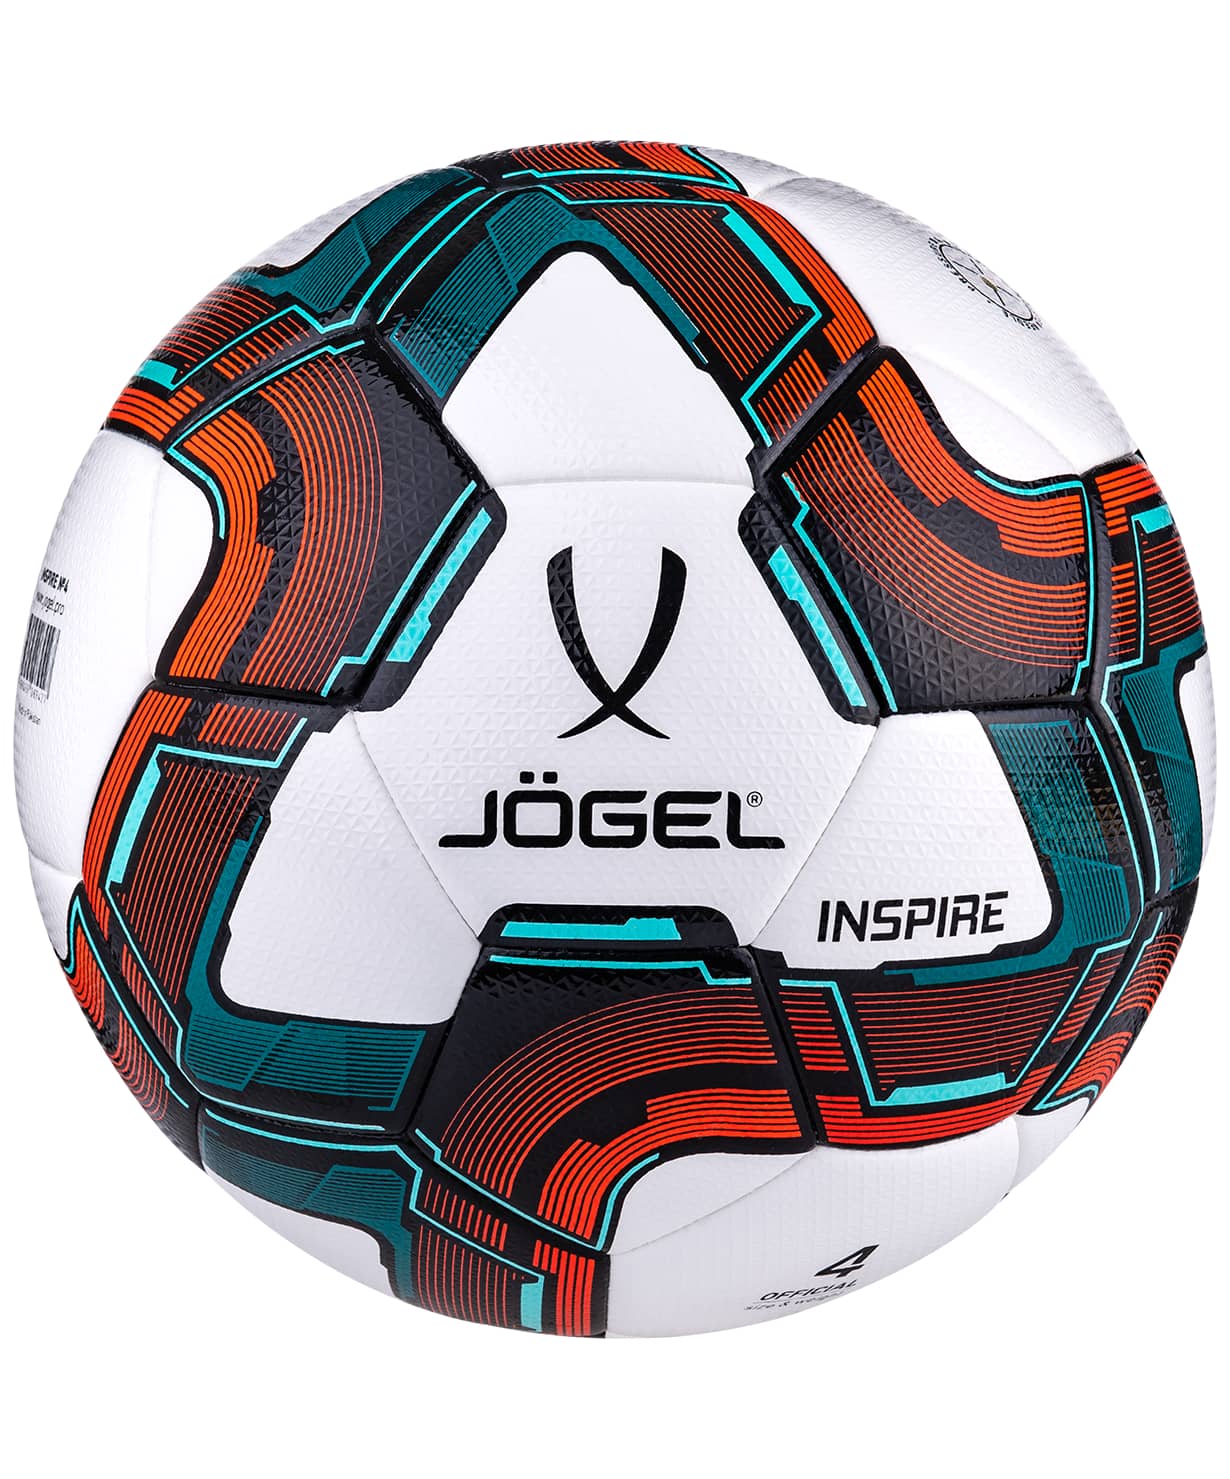 фото Jögel INSPIRE мяч футзальный белый Football-54 